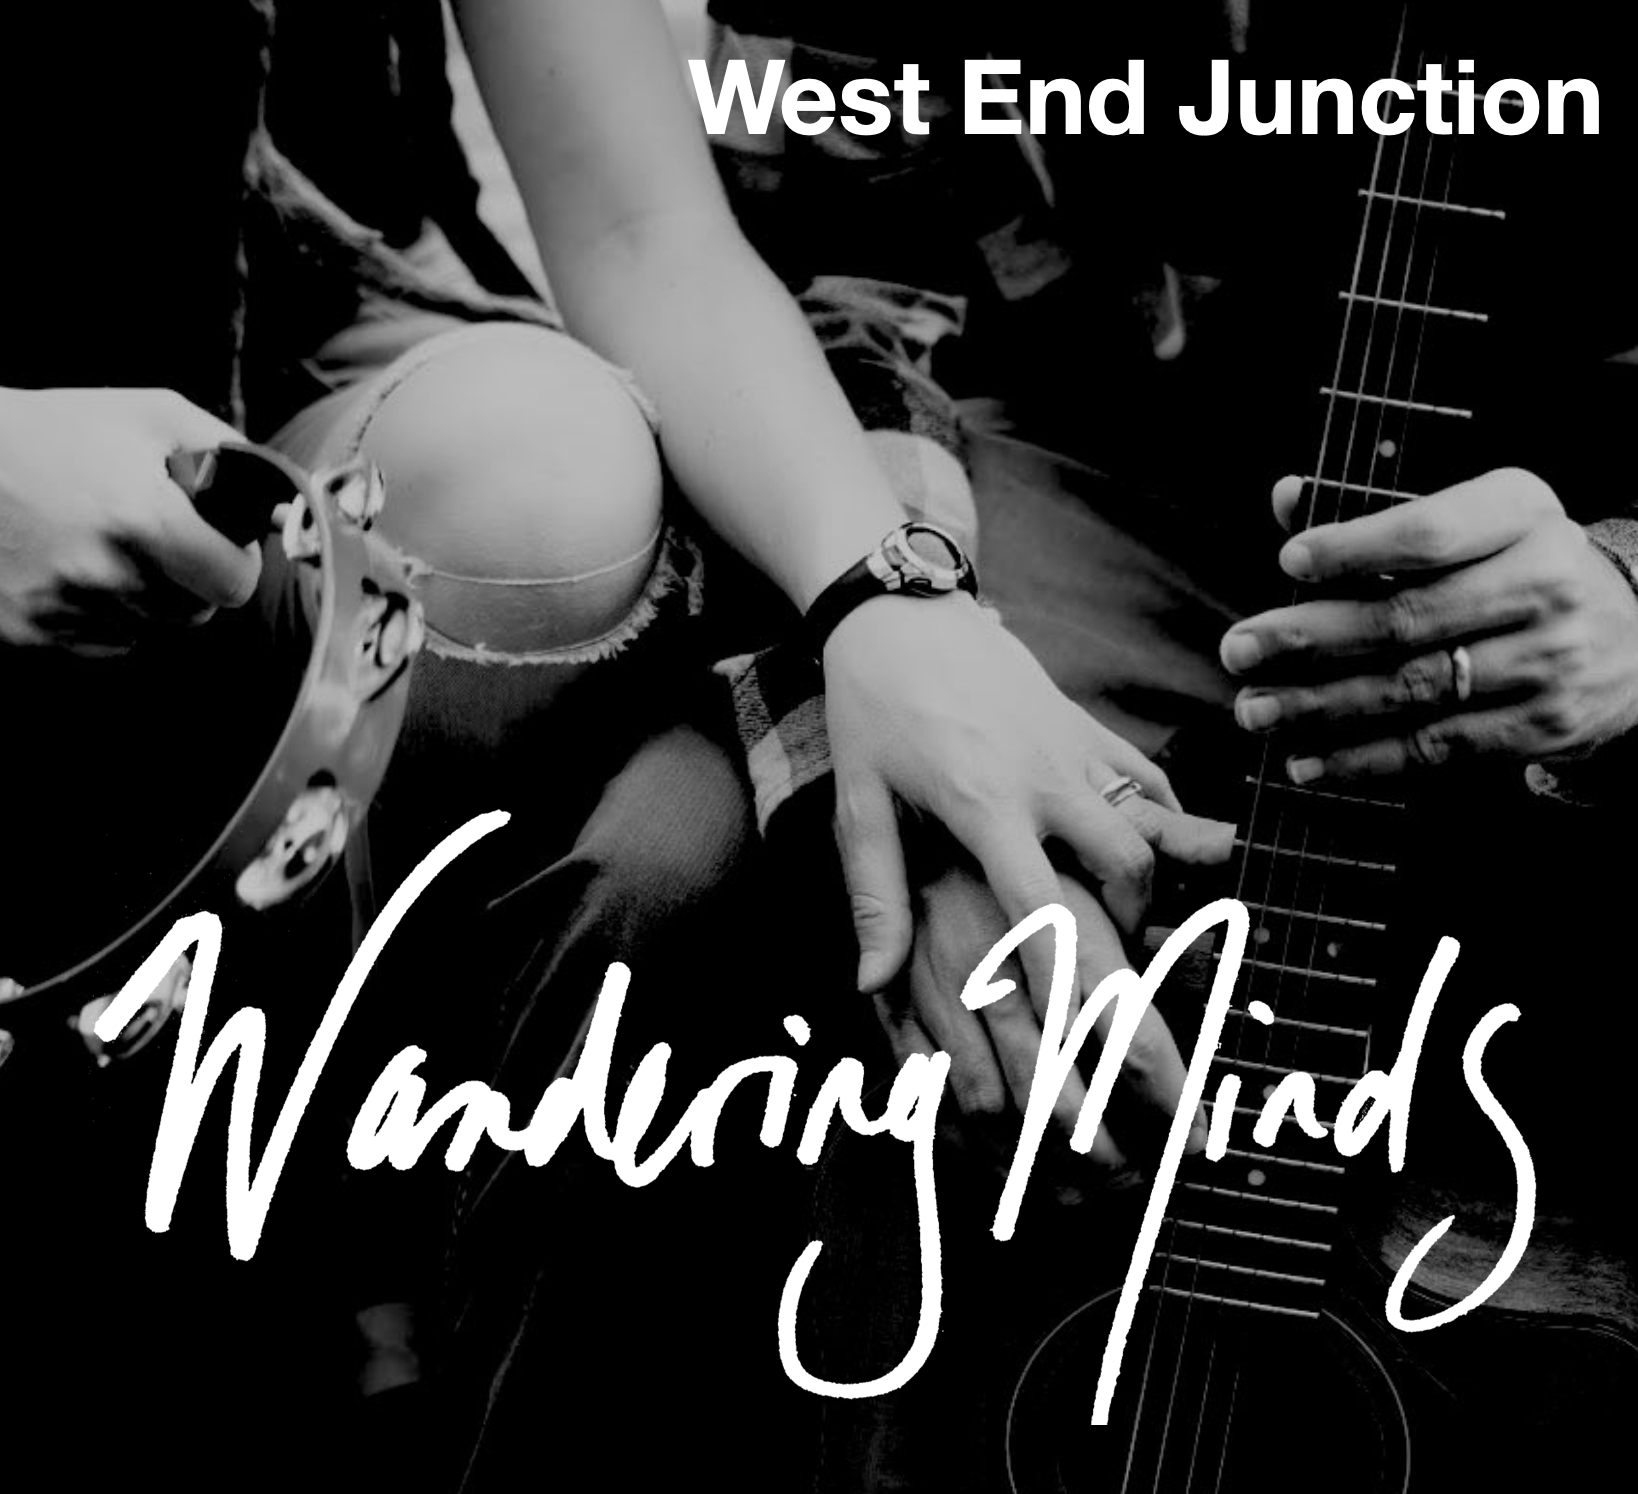 West End Junction: Wandering Minds